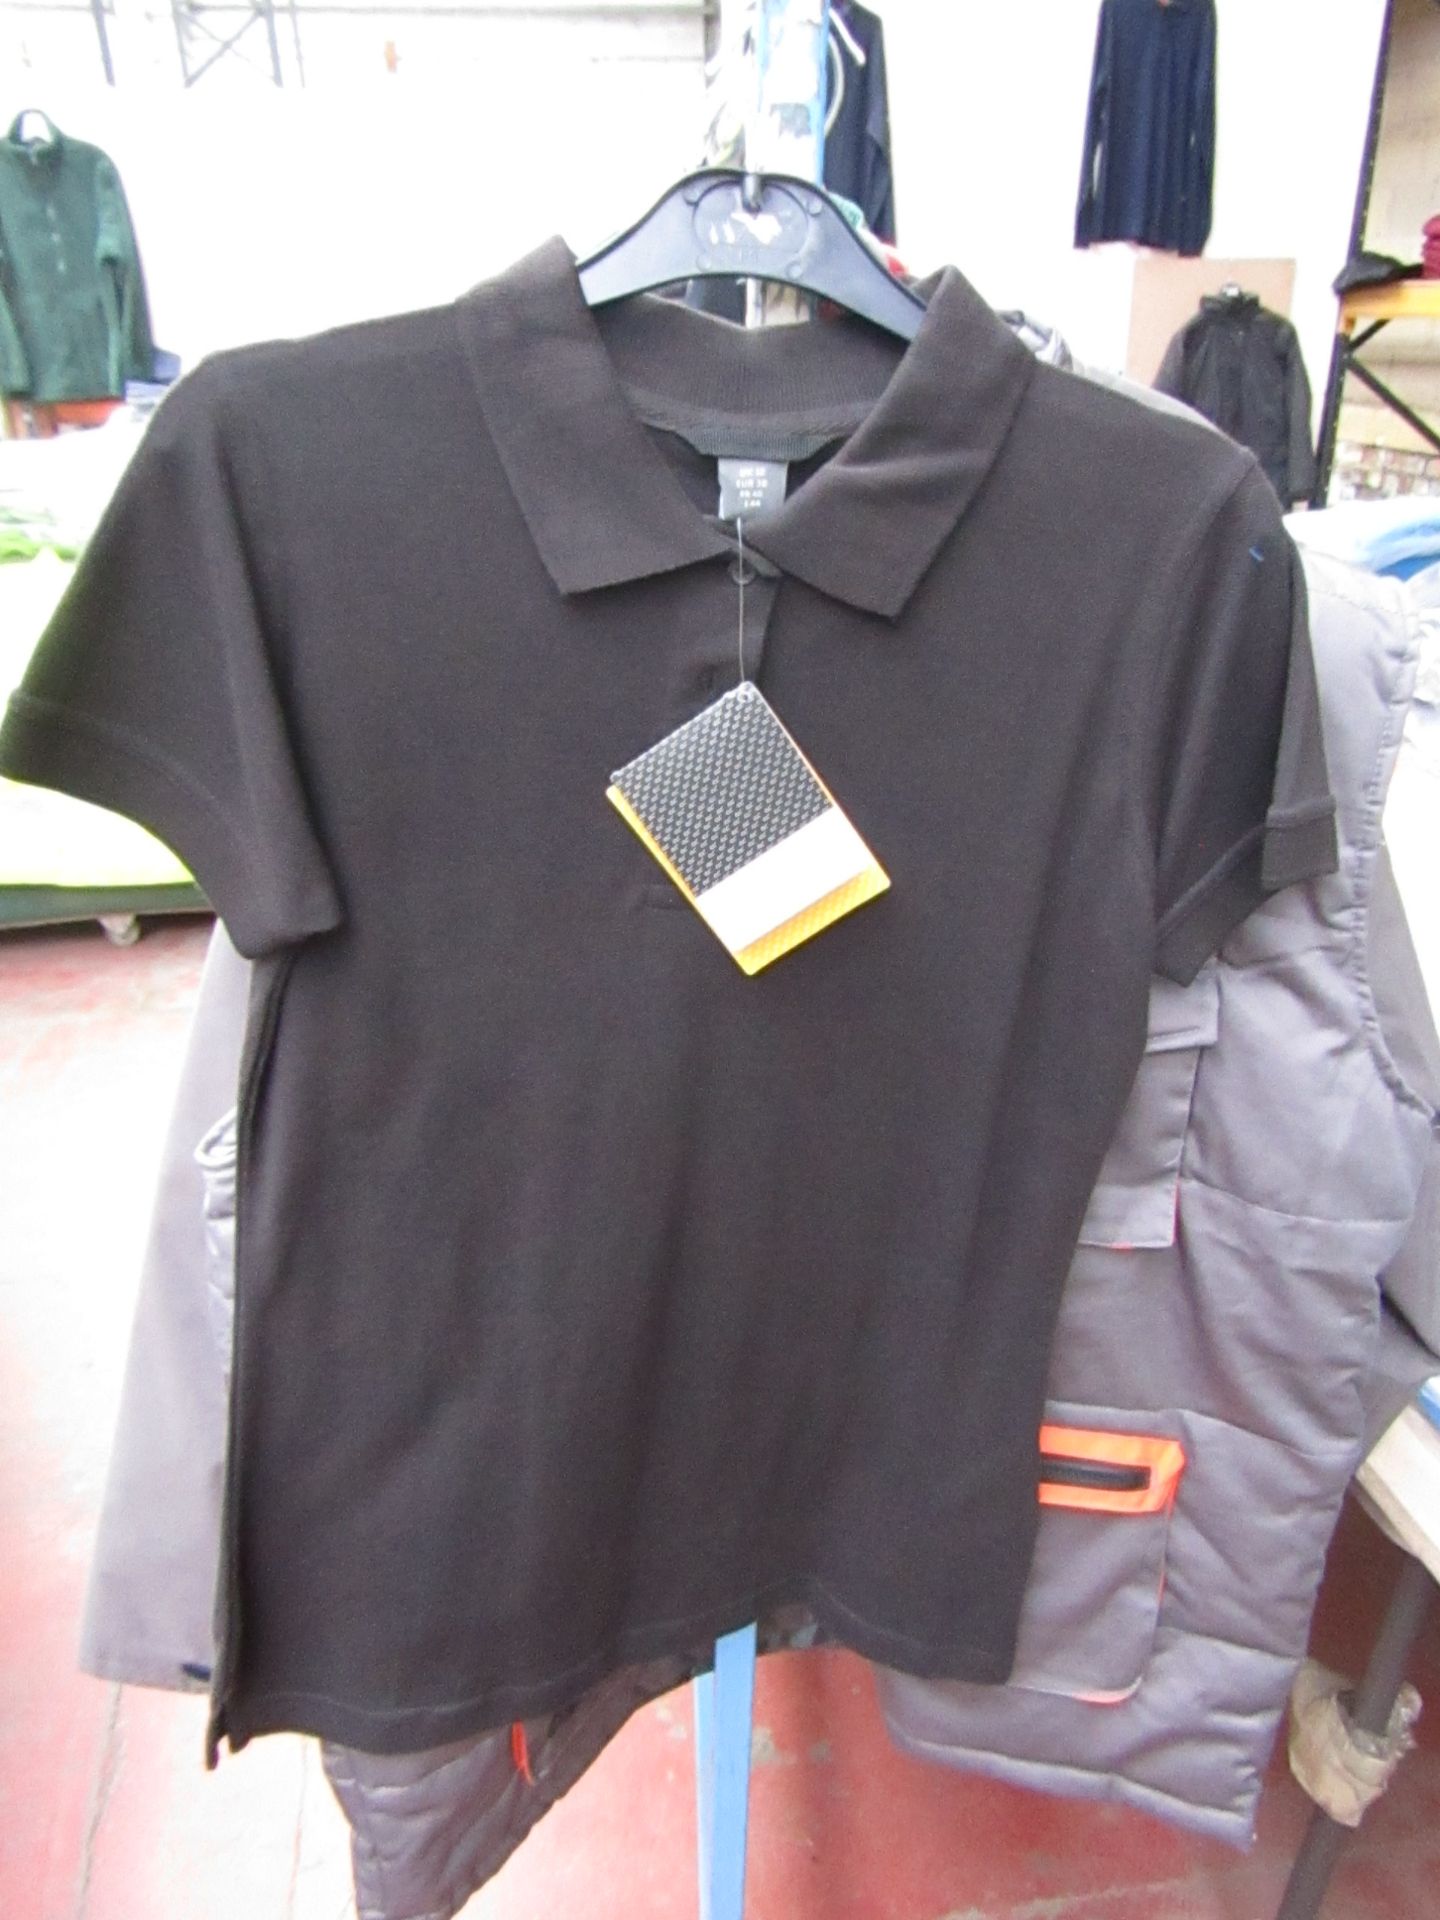 2x Ladies Regatta Black Polo Shirt, Size 10. New in Packaging